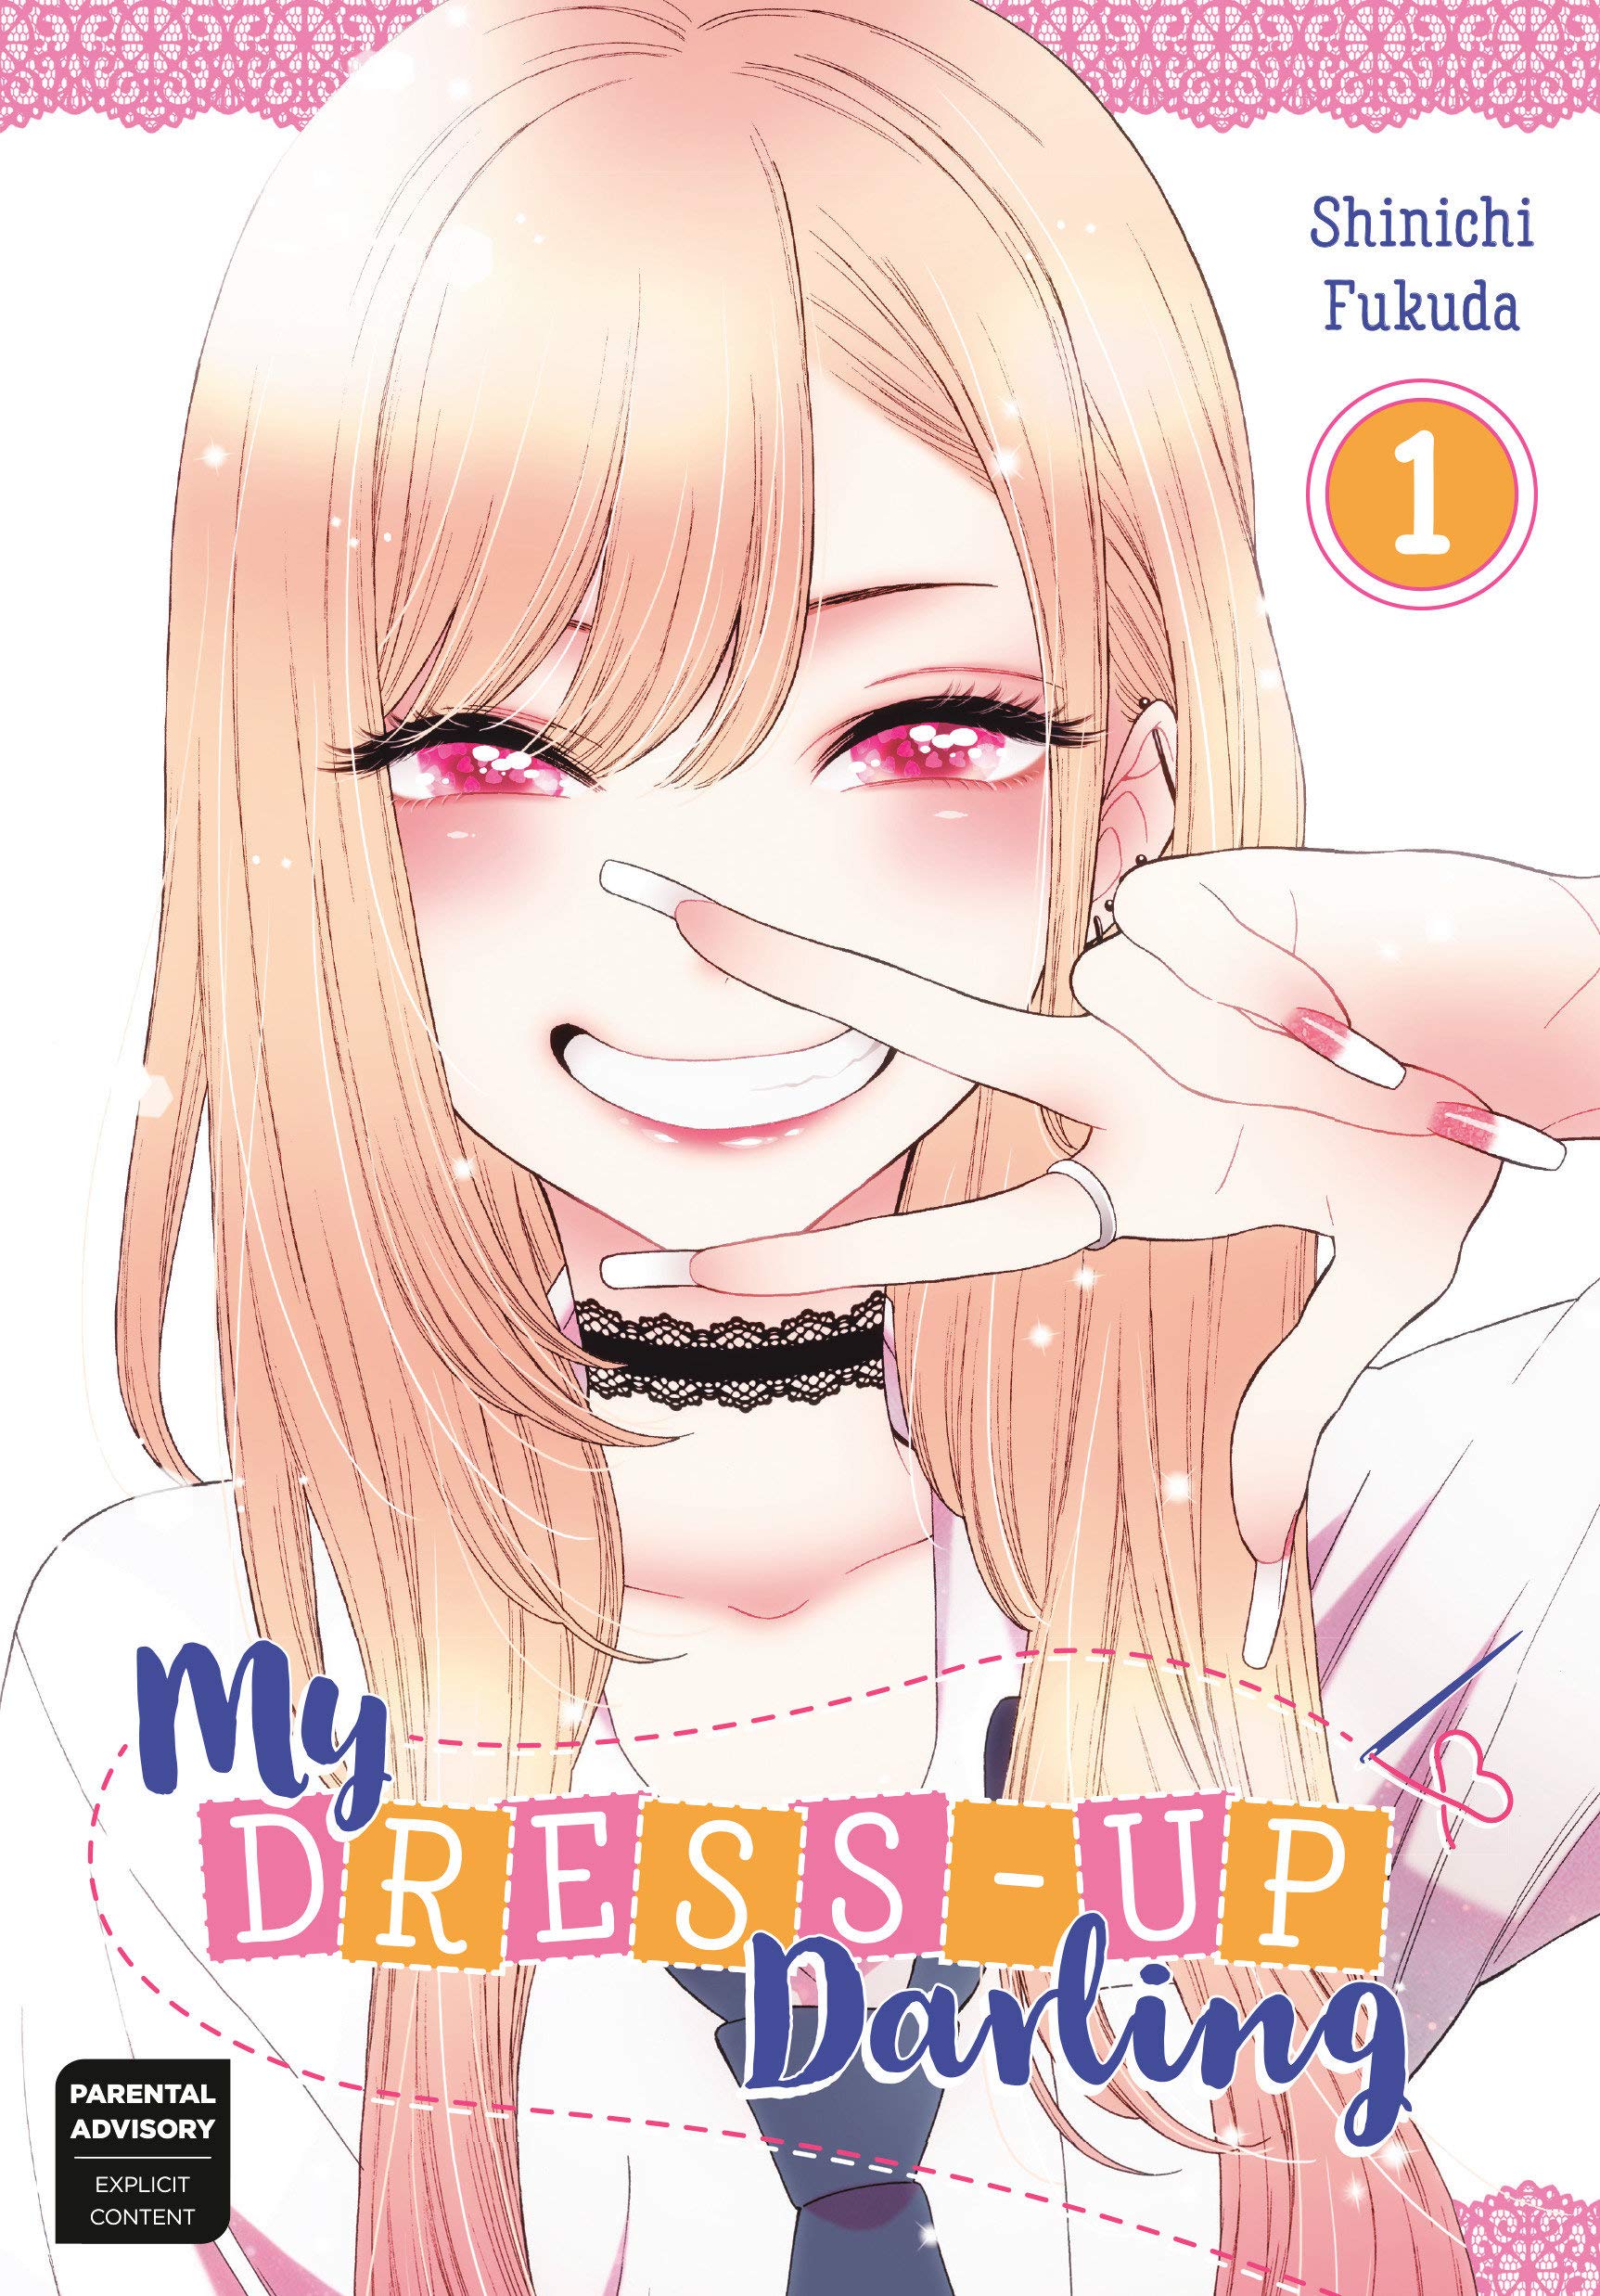 dress darling manga anime 1.5 million sells